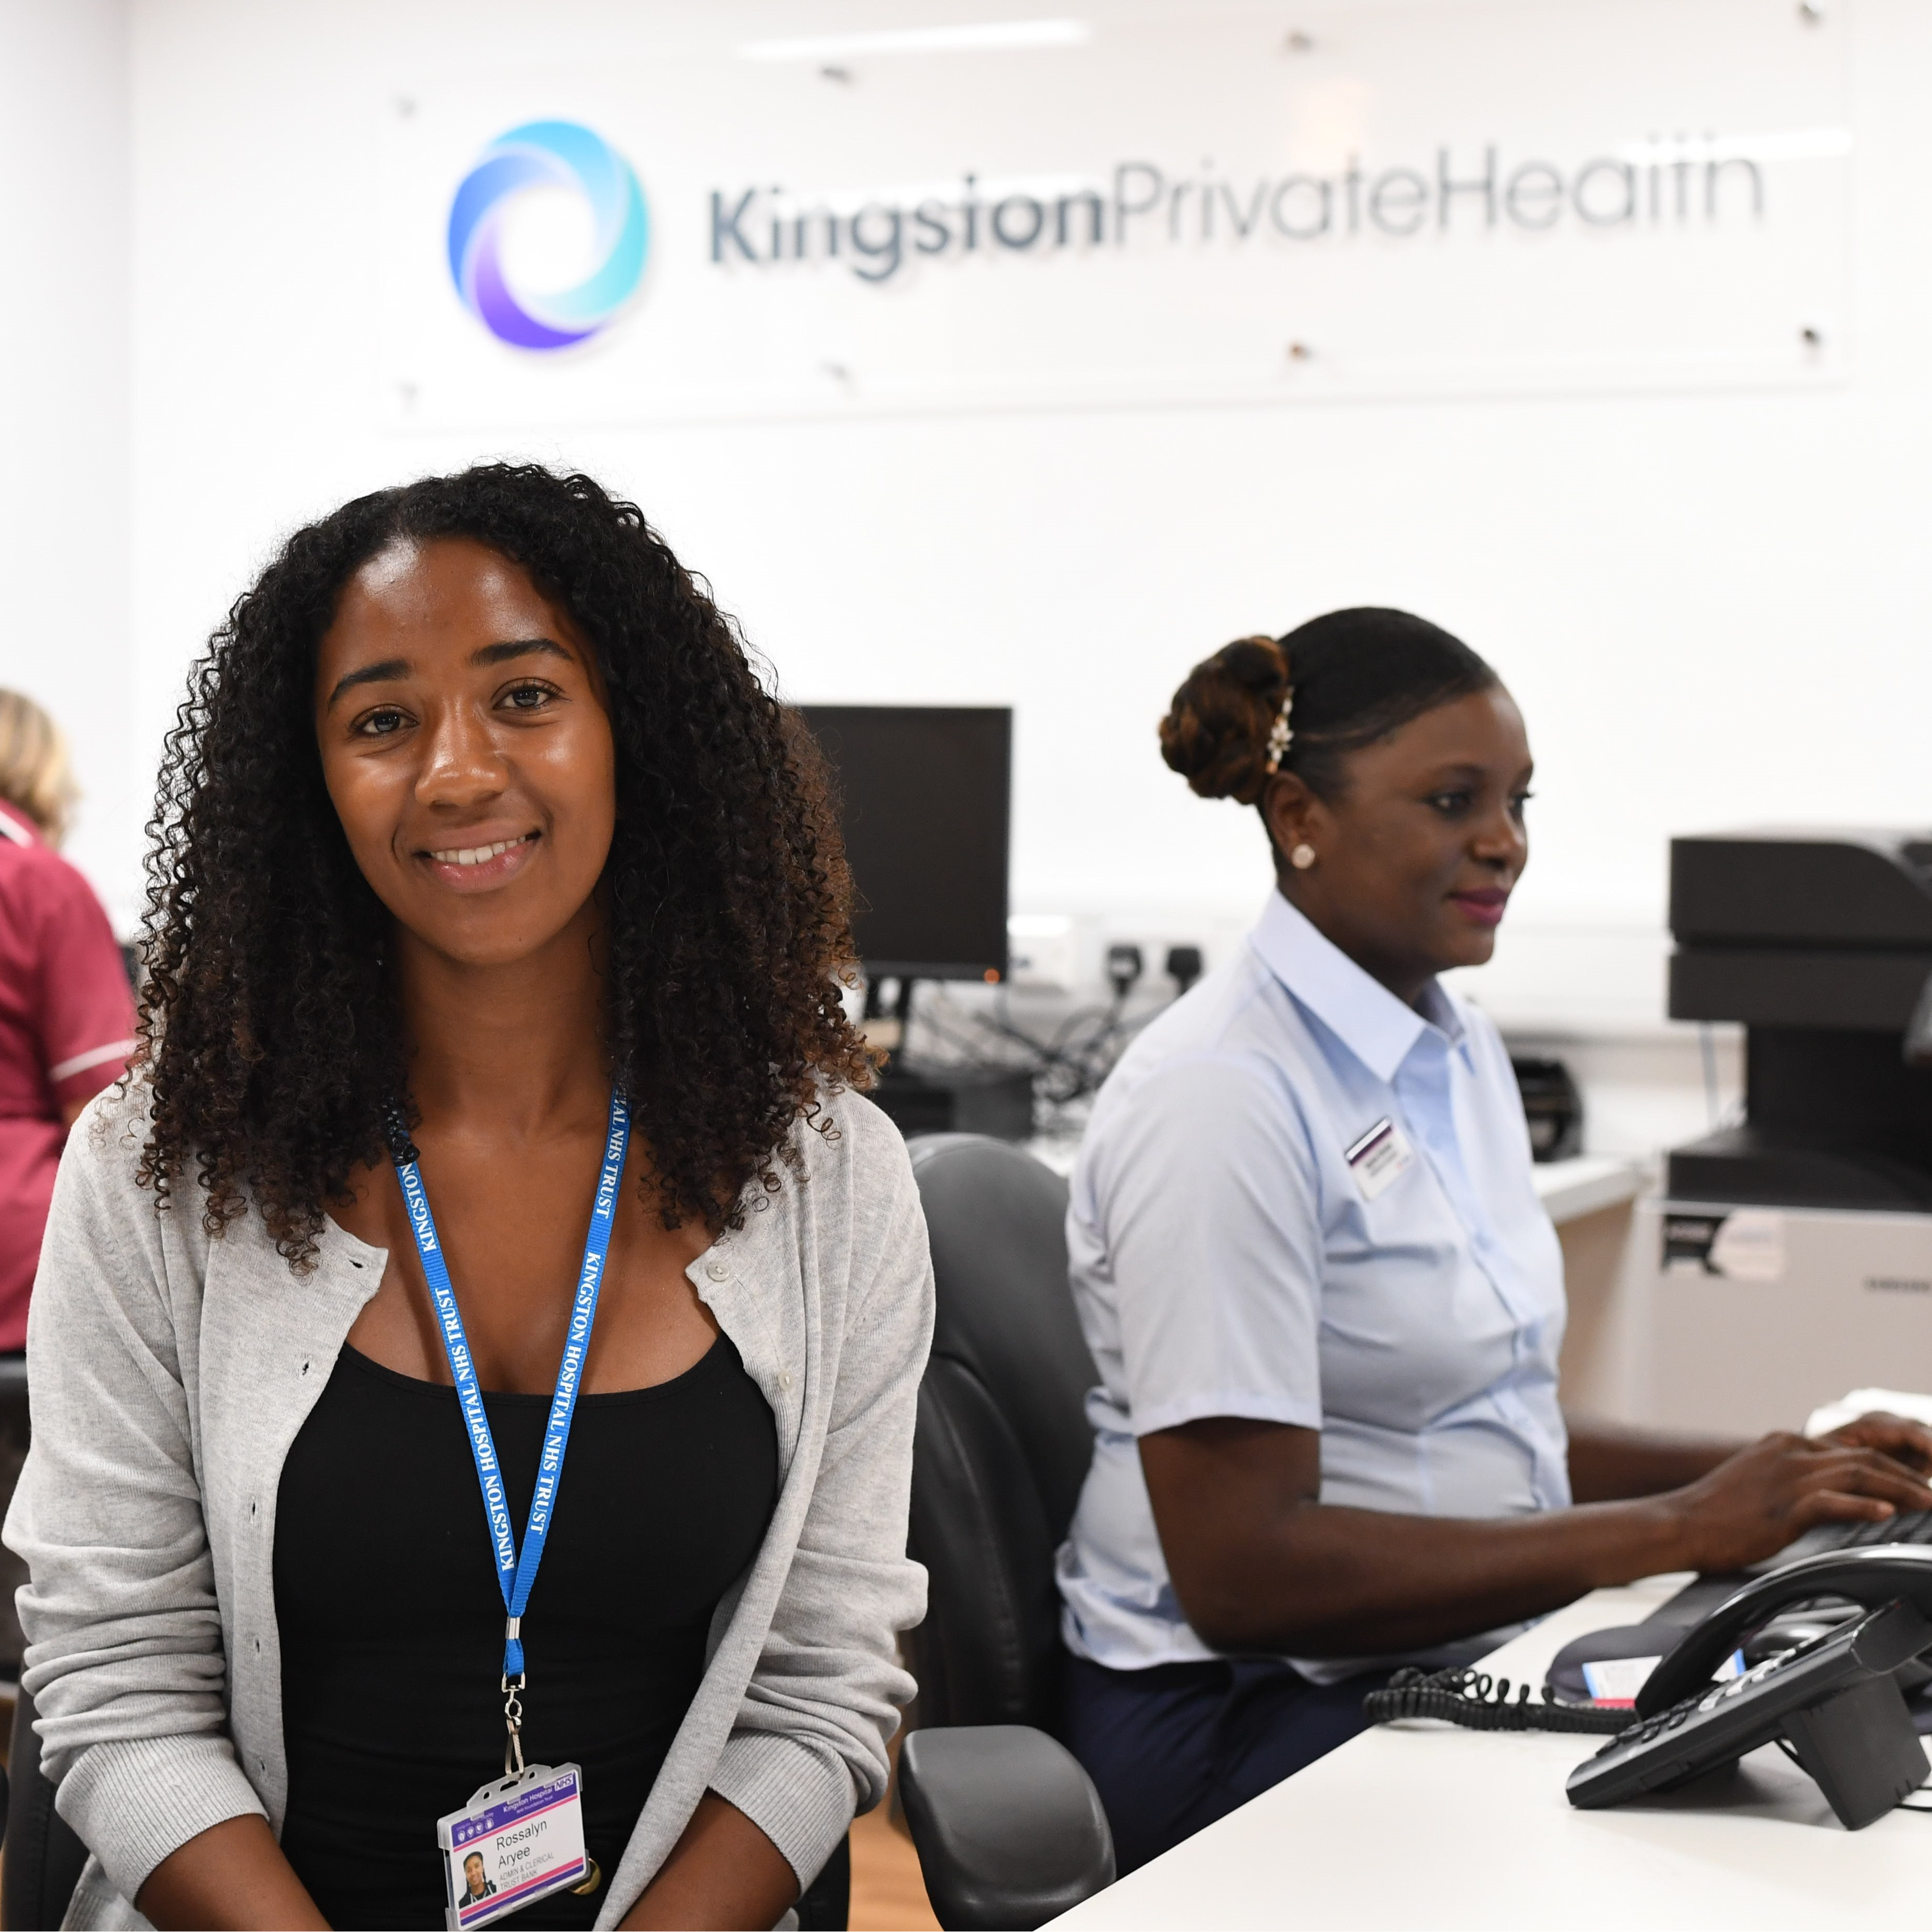 Kingston Private Health